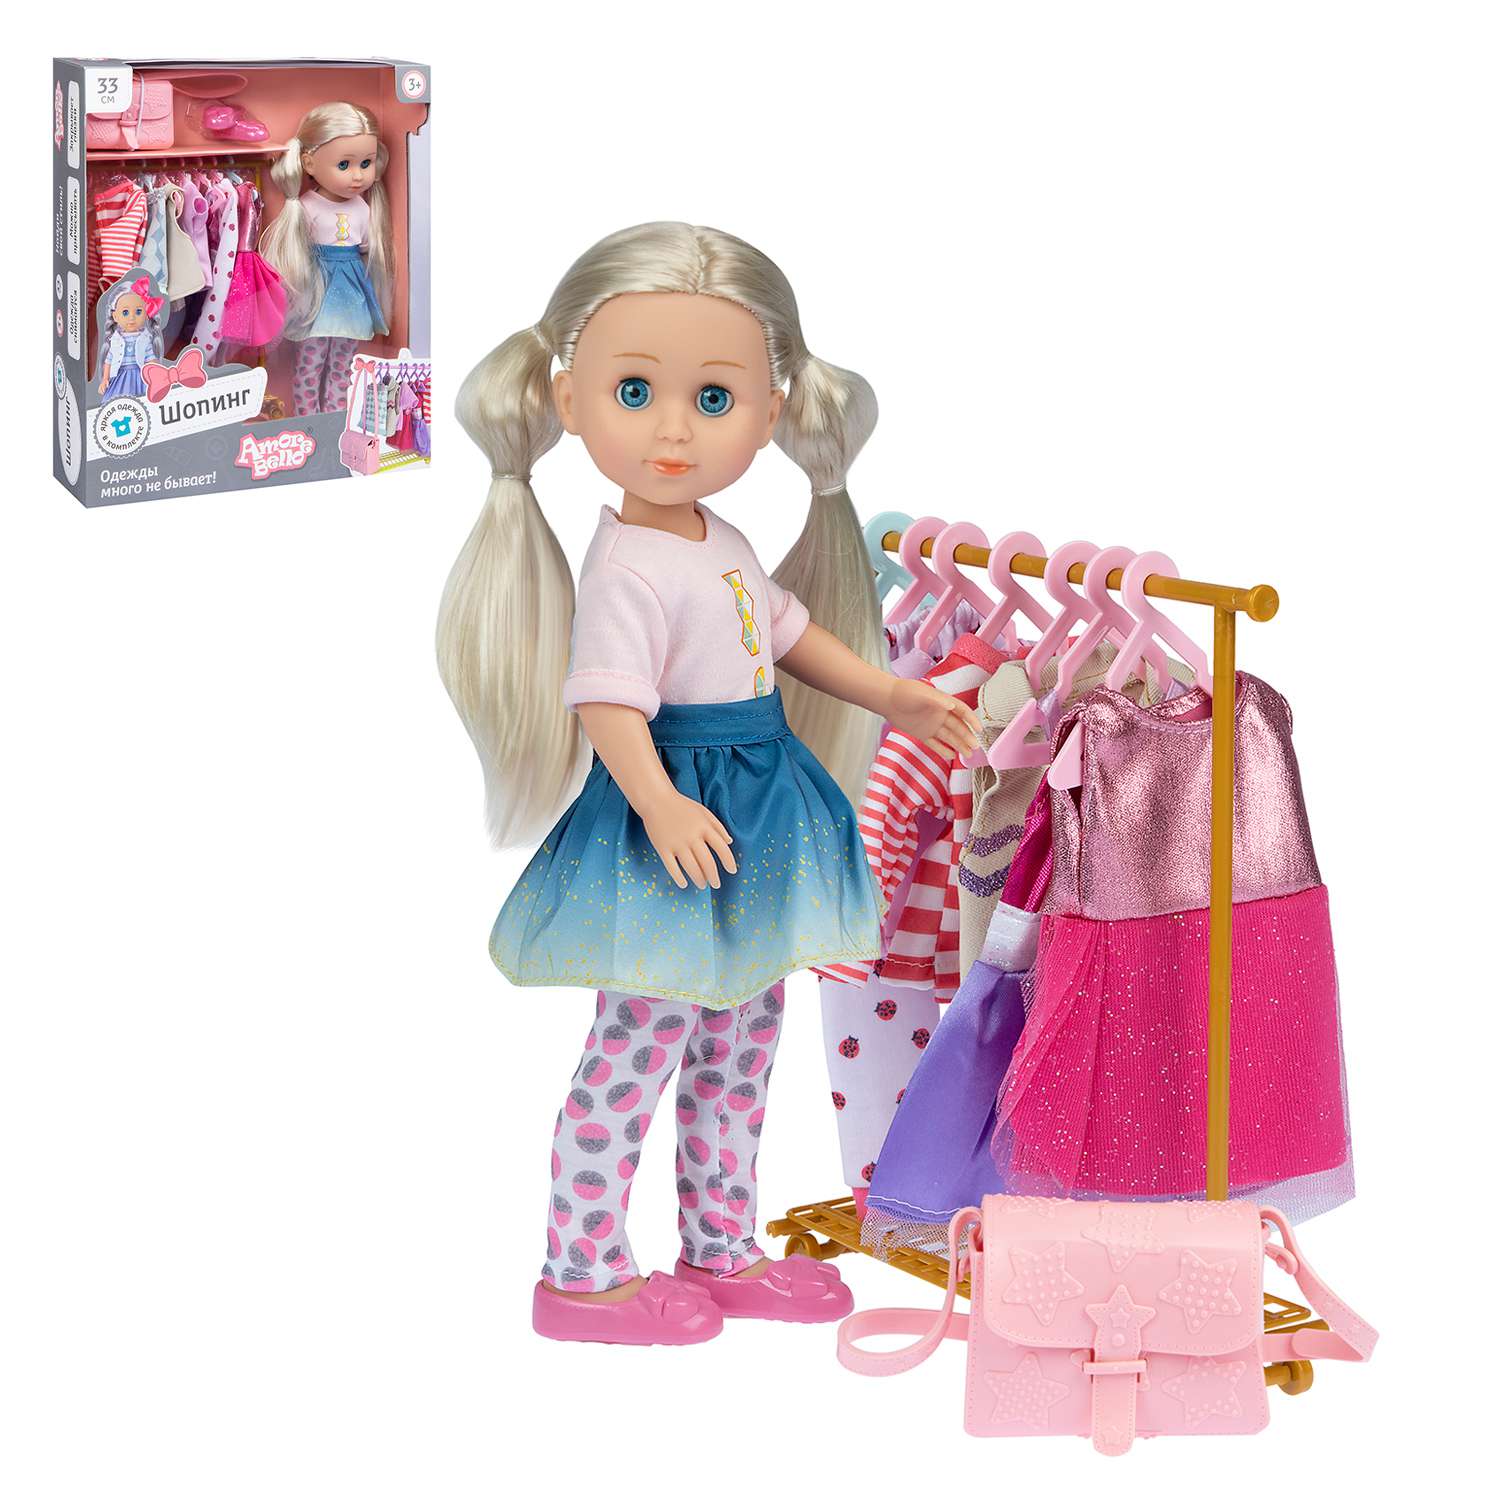 Кукла JB0211476 Шопинг с одеждой и аксессуарами ТМ Amore Bello - Заинск 